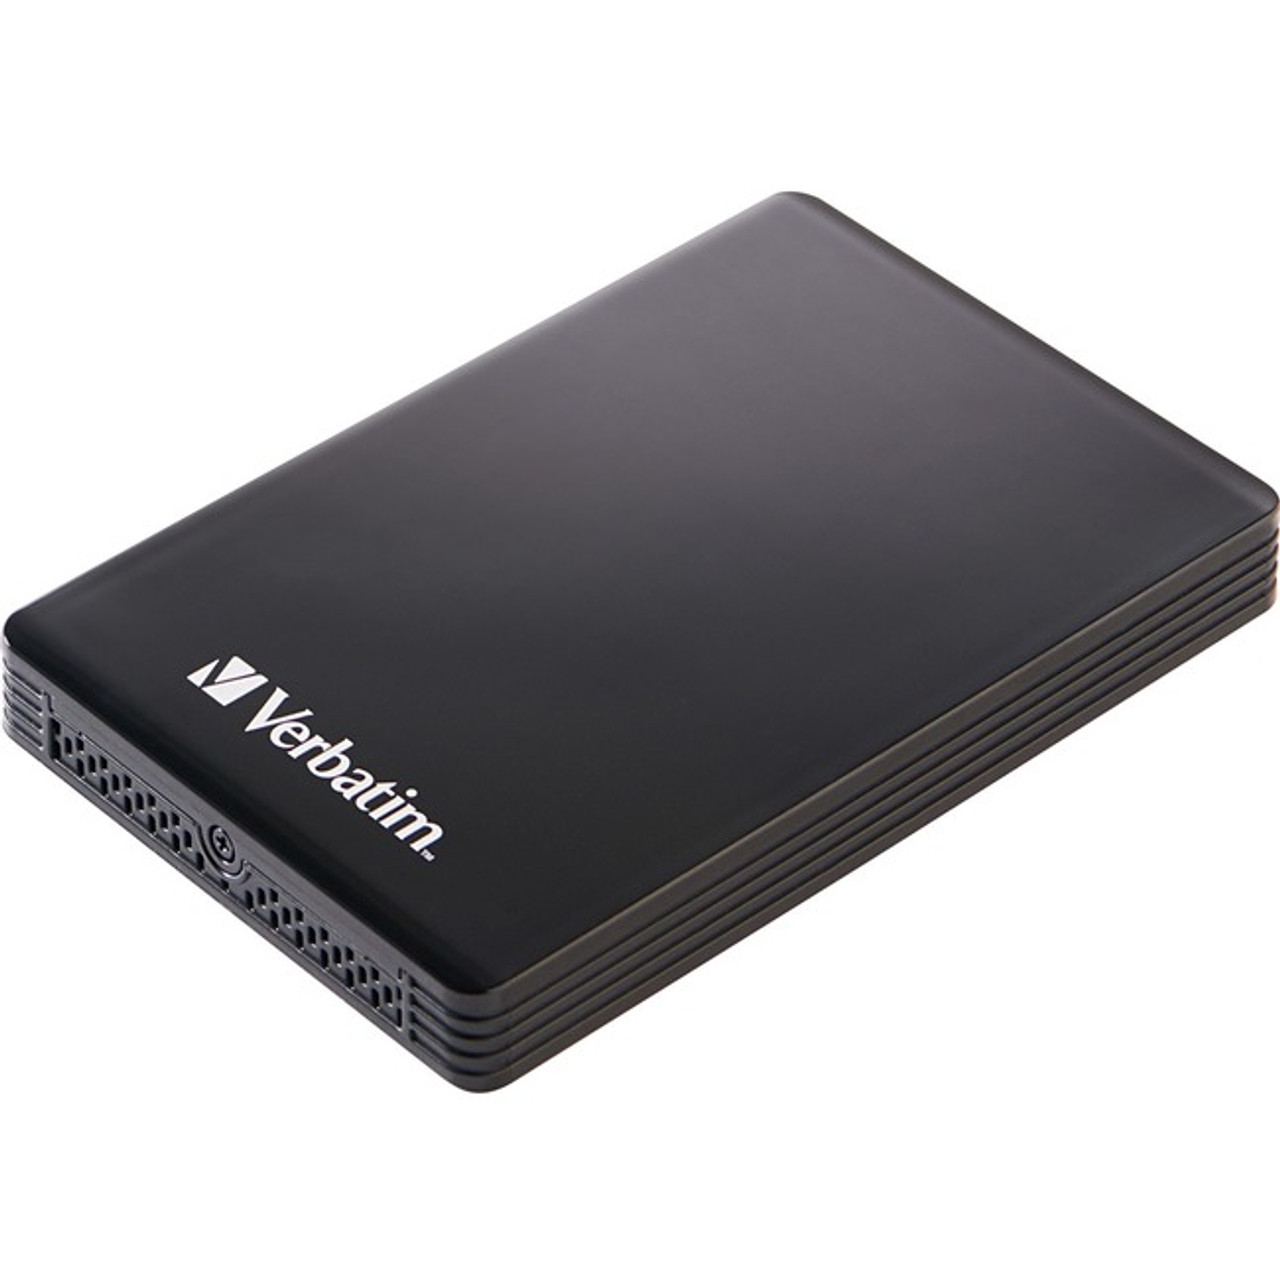 Verbatim 256GB Vx460 External SSD USB 3.1 Gen 1 - Black (70382)-